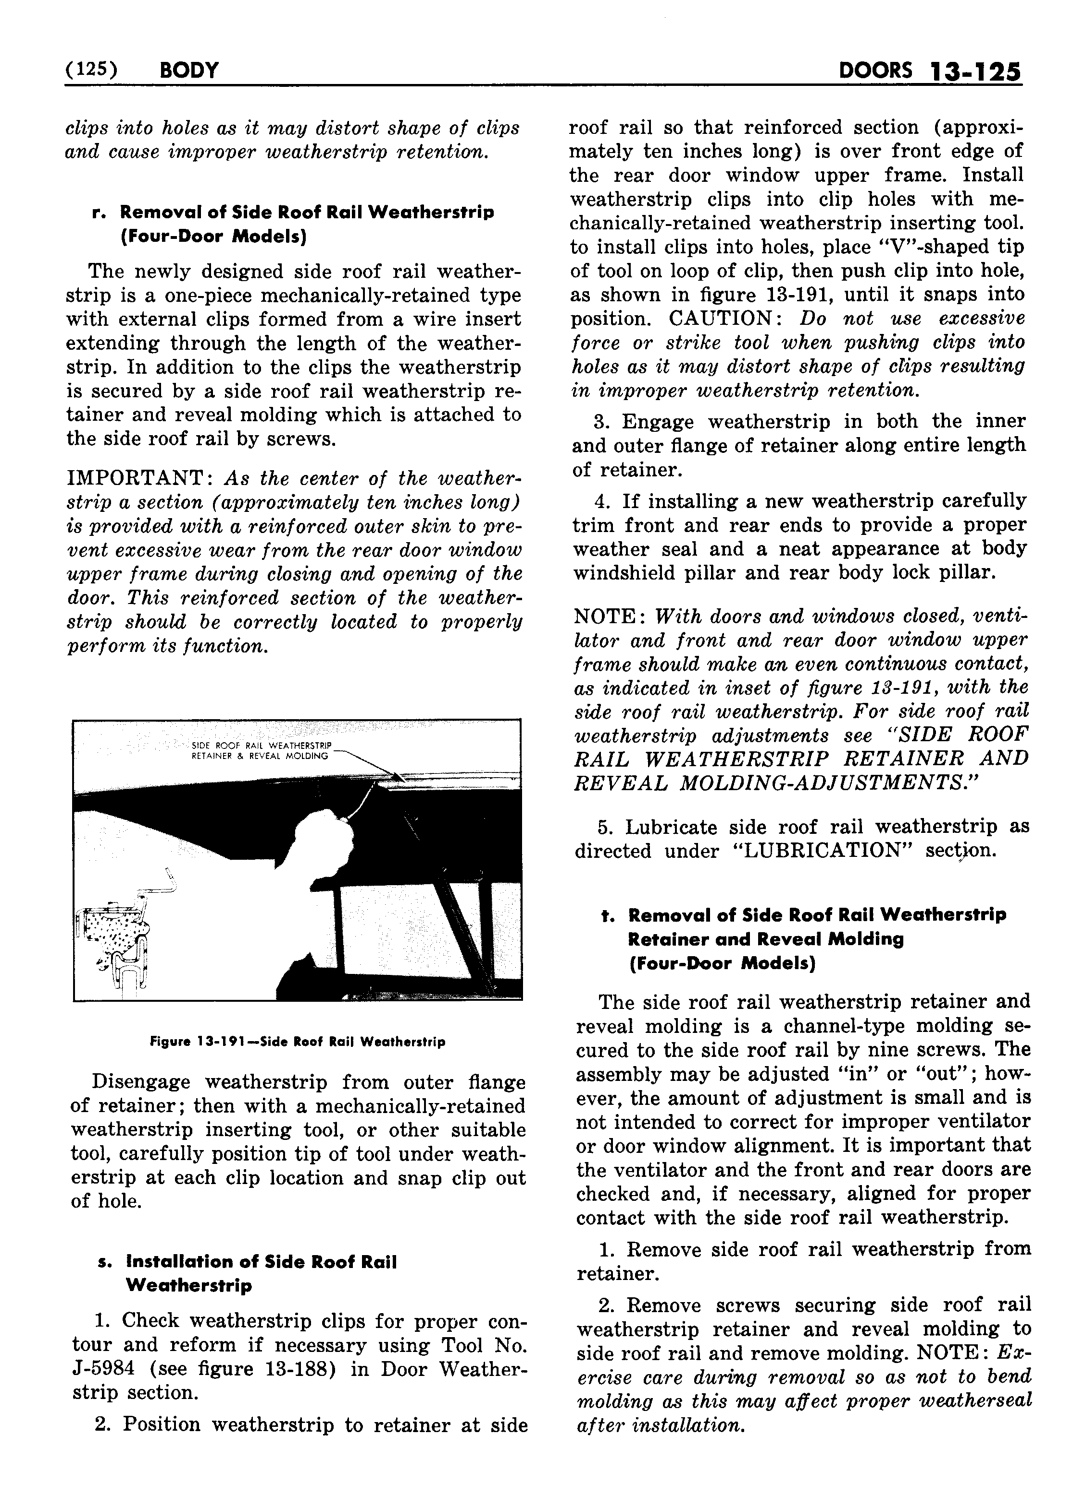 n_1957 Buick Body Service Manual-127-127.jpg